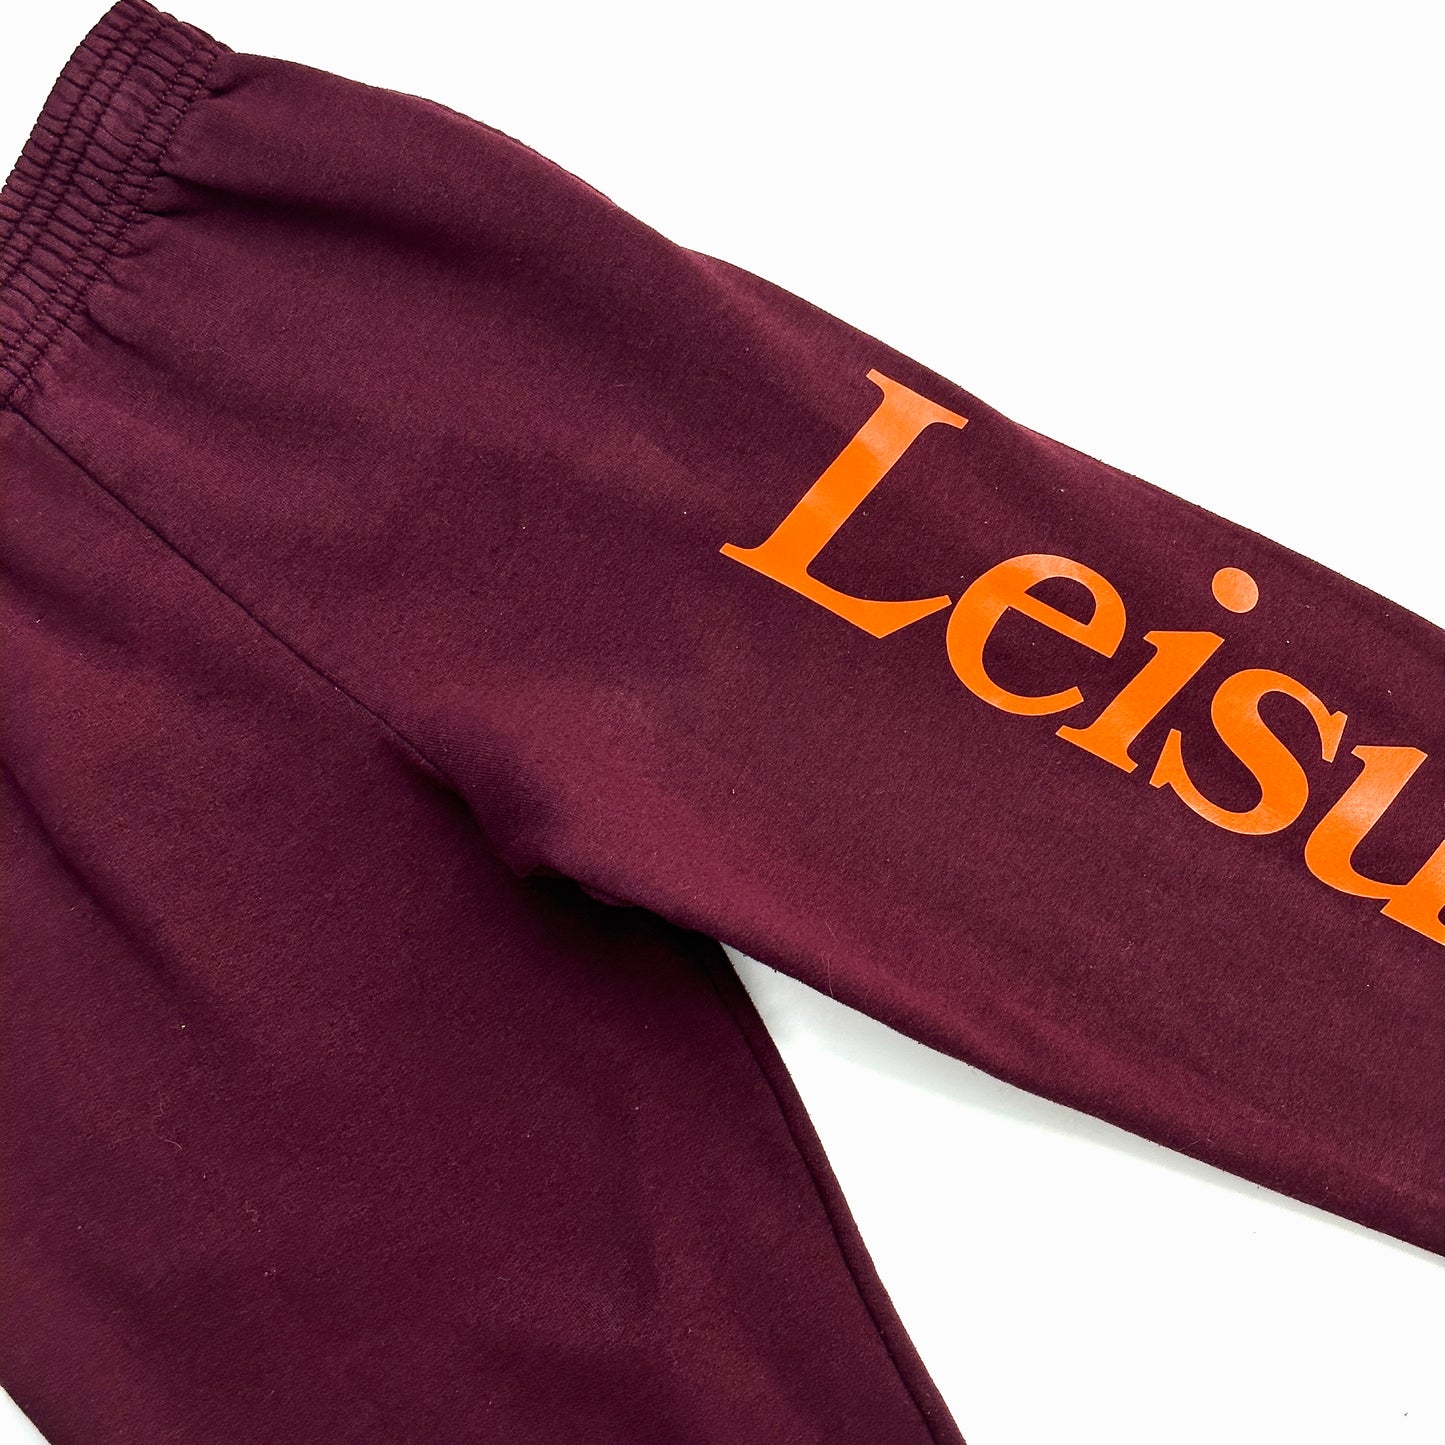 LEISURE - Burgundy Logo Sweats - Size 8-10yr